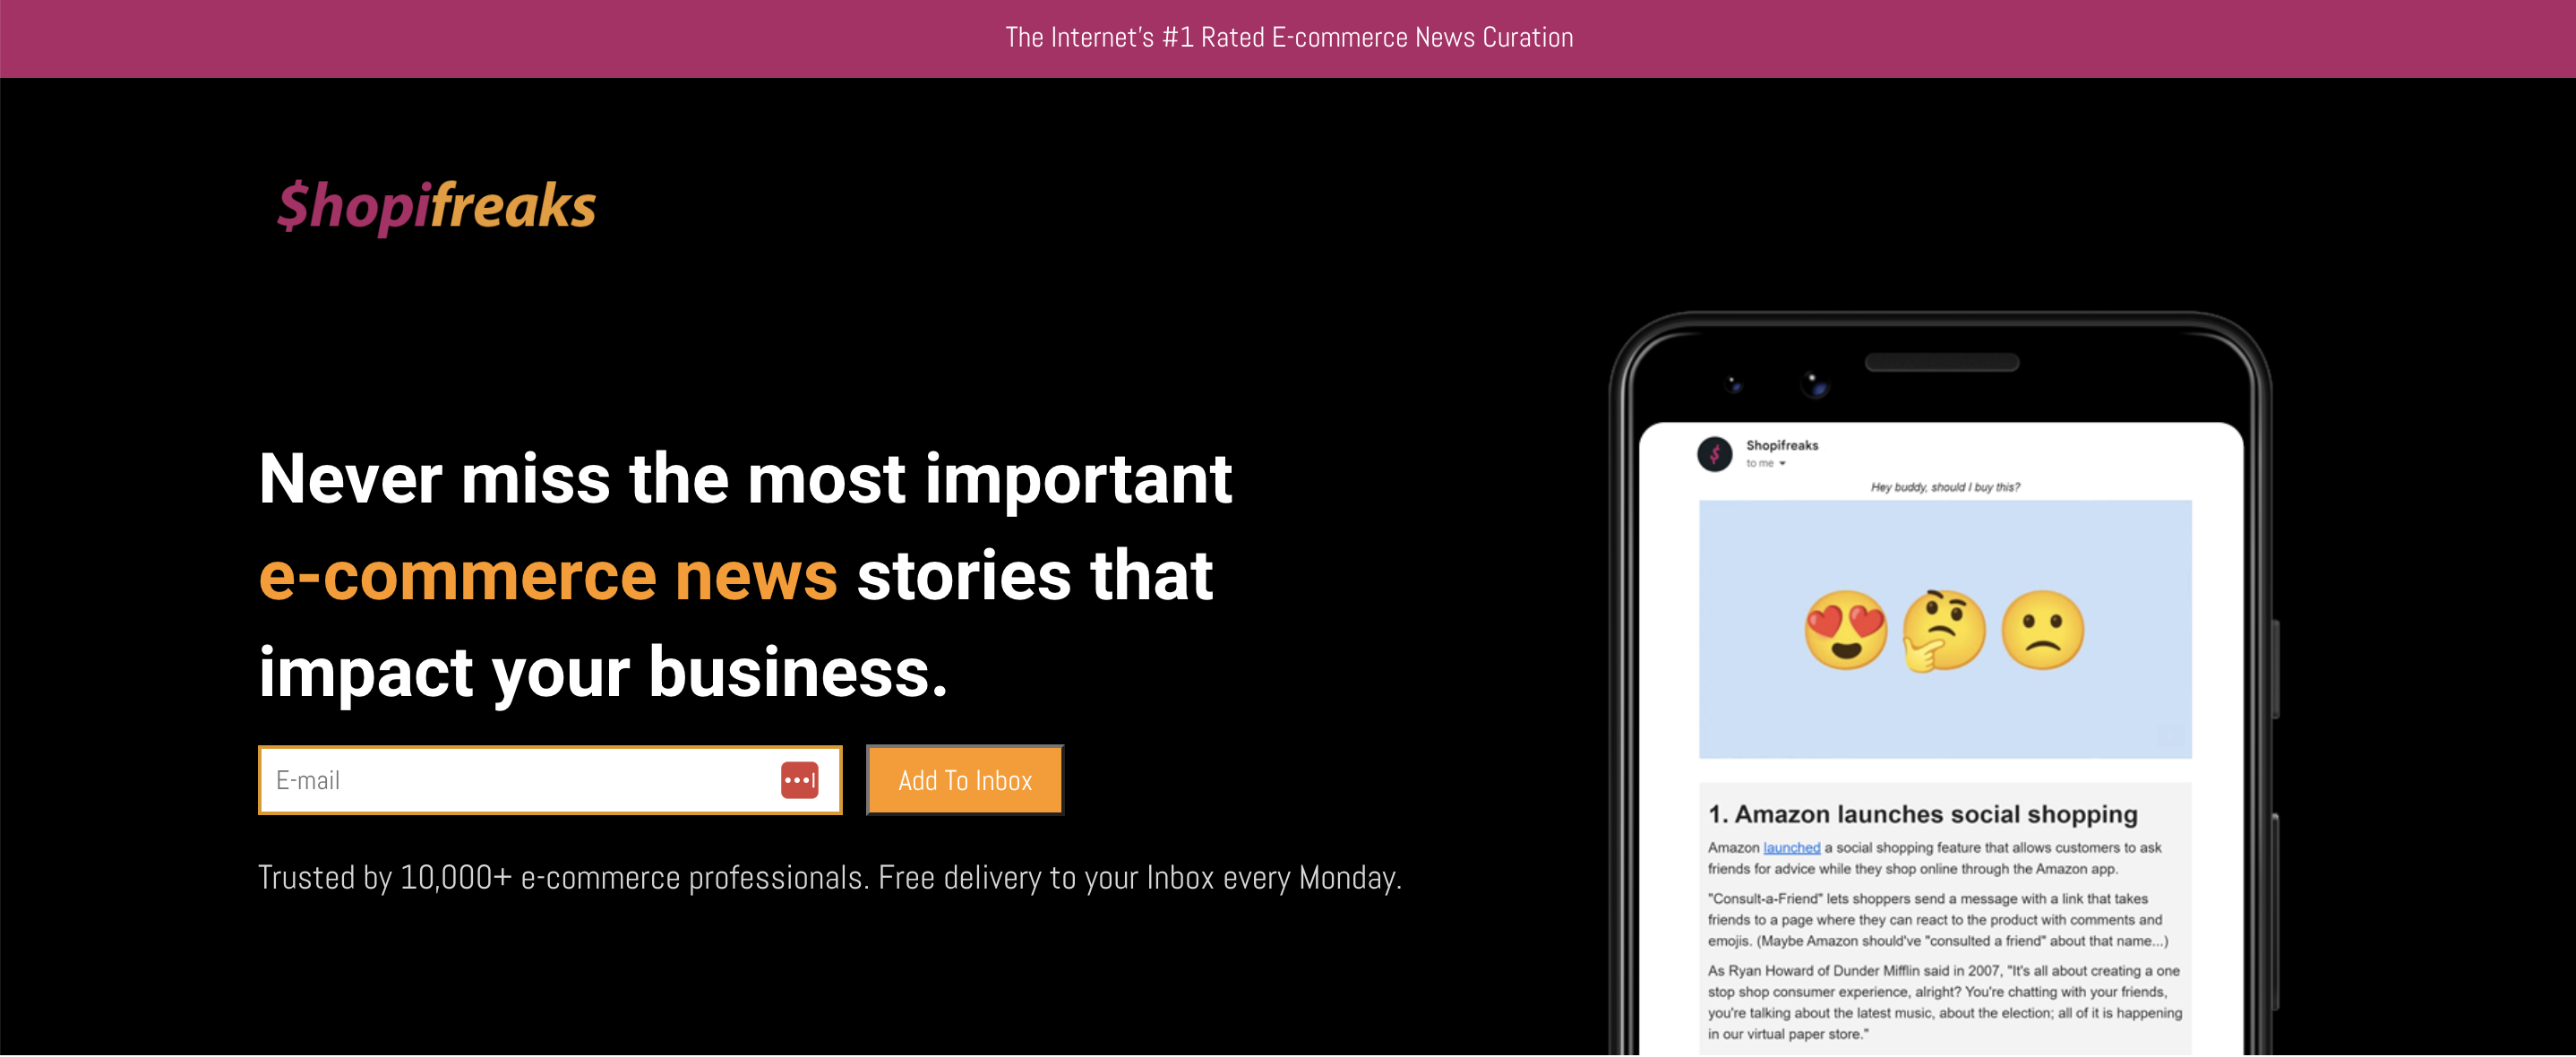 Shopifreaks e コマース ニュースレターは、インターネットでナンバー 1 の e コマース ニュース キュレーションであり、毎週更新情報と洞察を提供します。